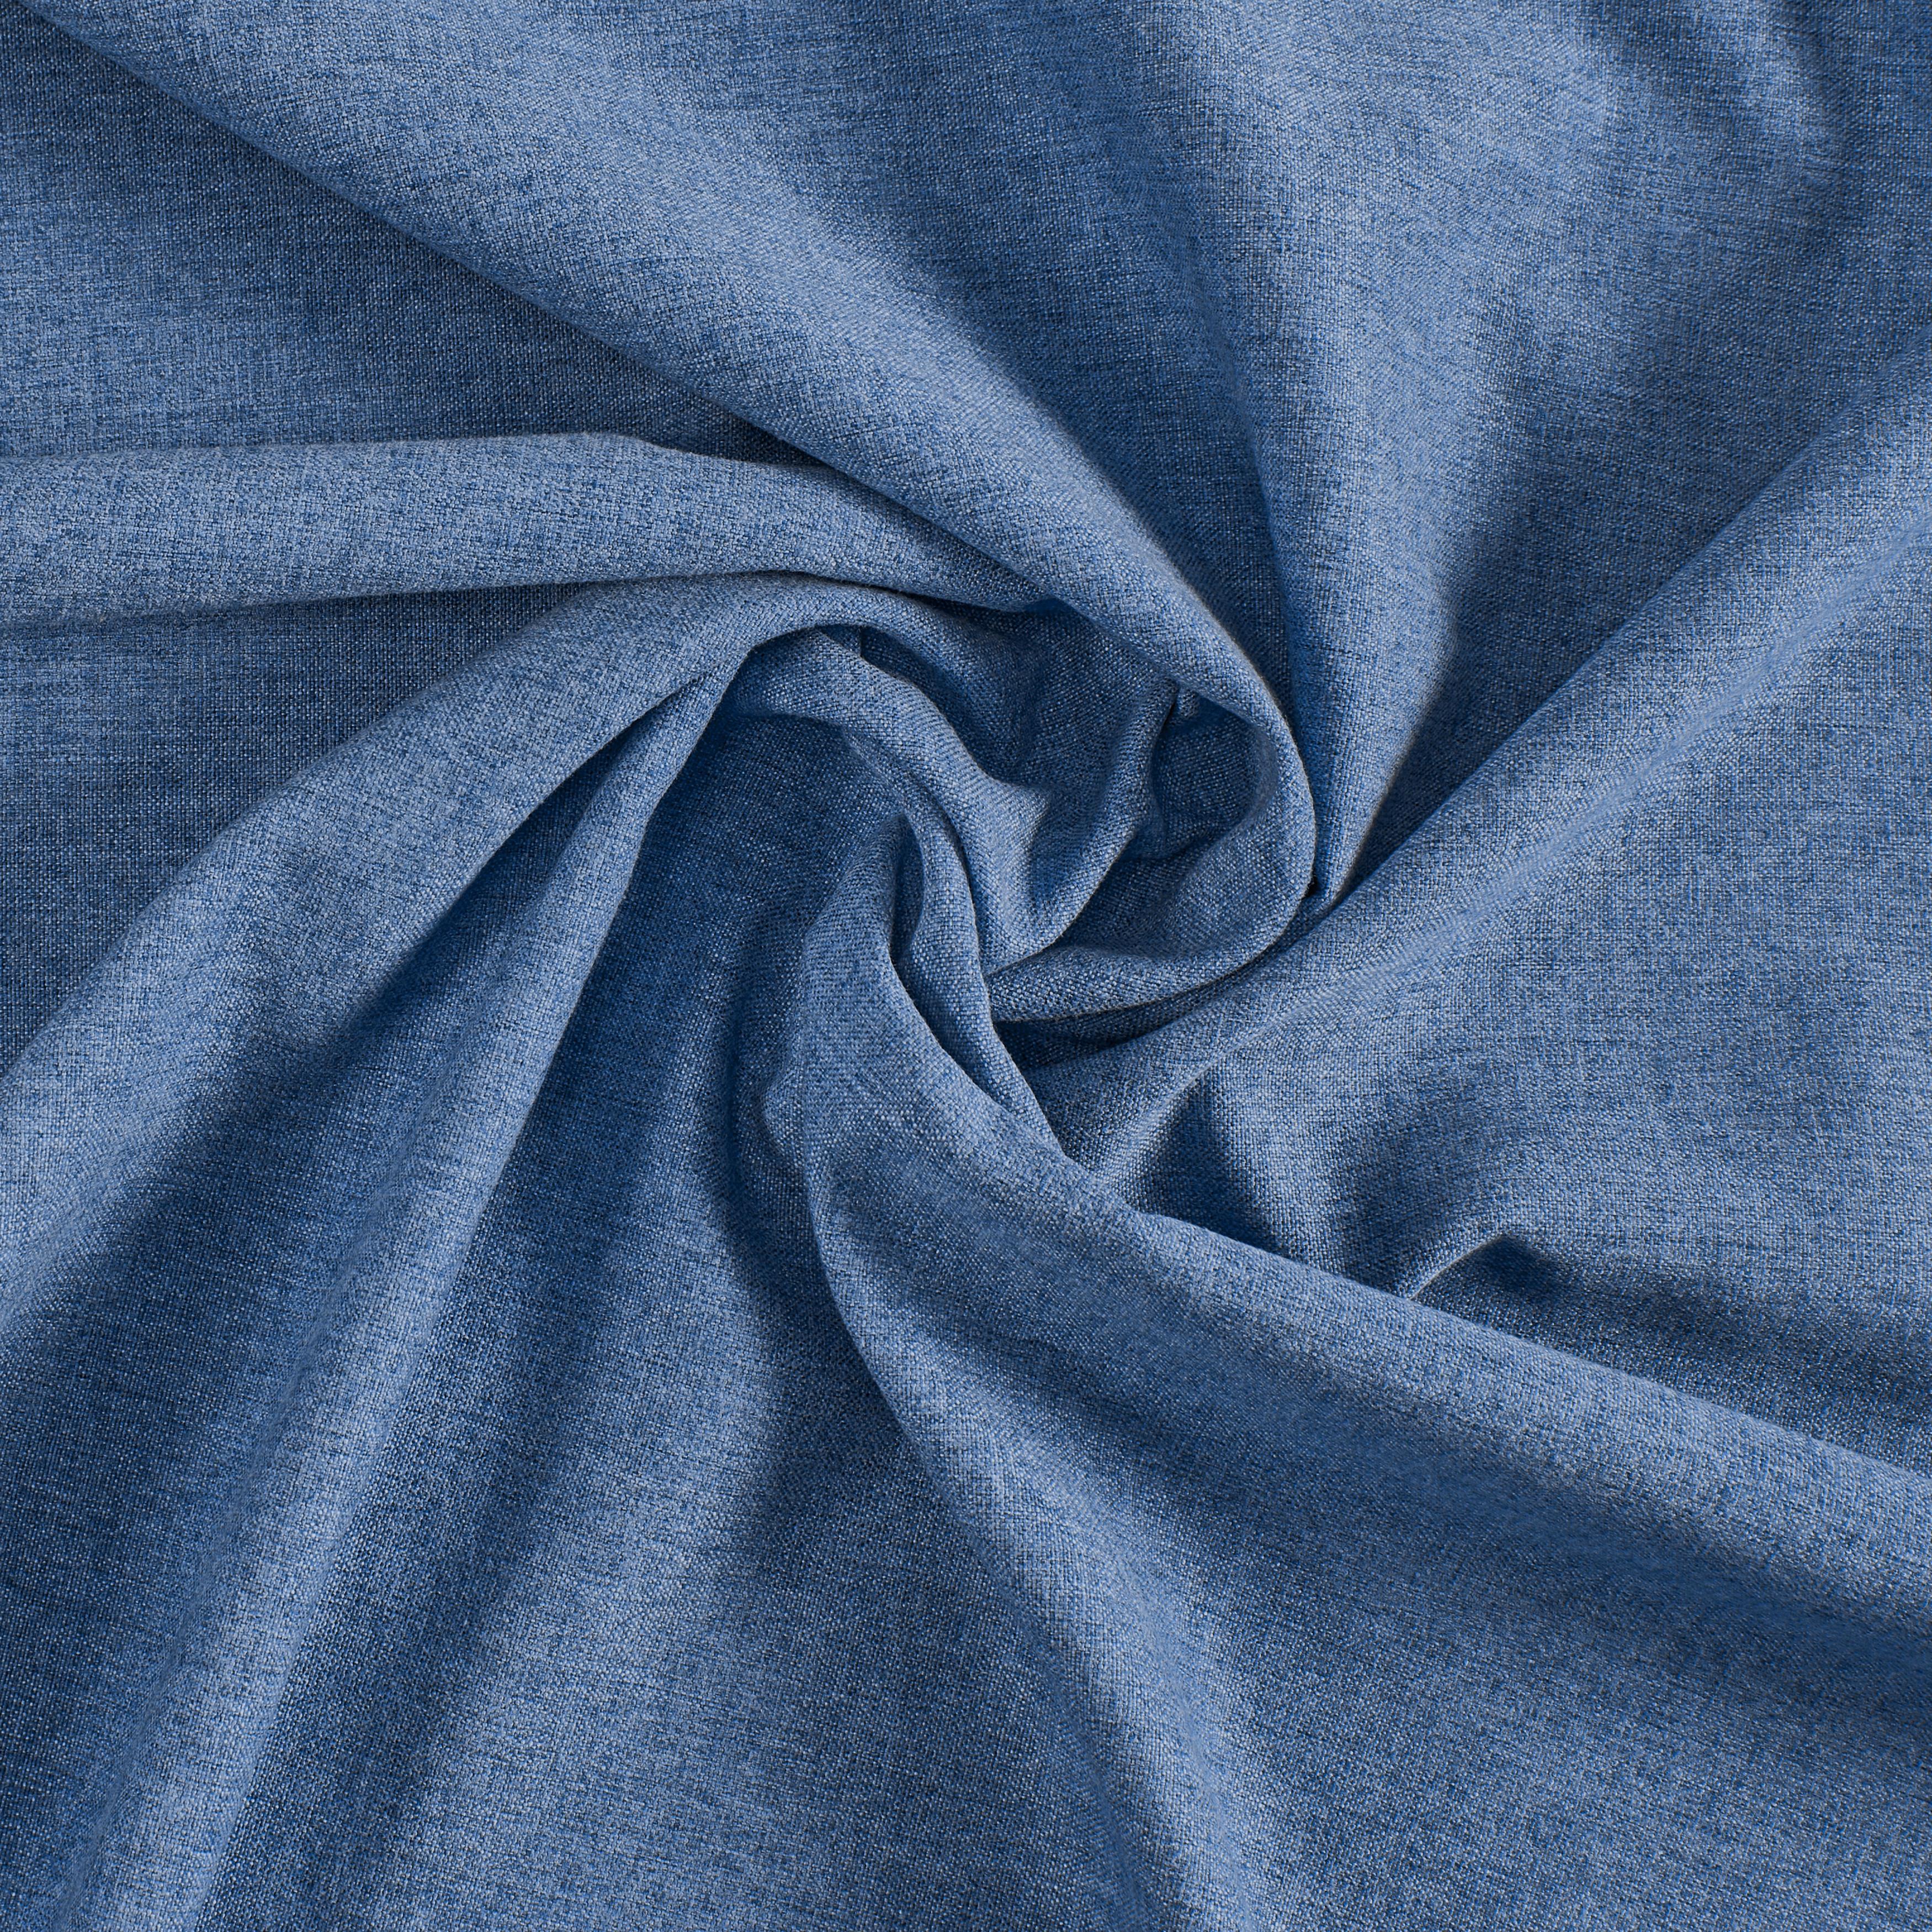 Hotový Záves Ulrich, 135/245cm, Modrá - modrá, textil (135/245cm) - Modern Living